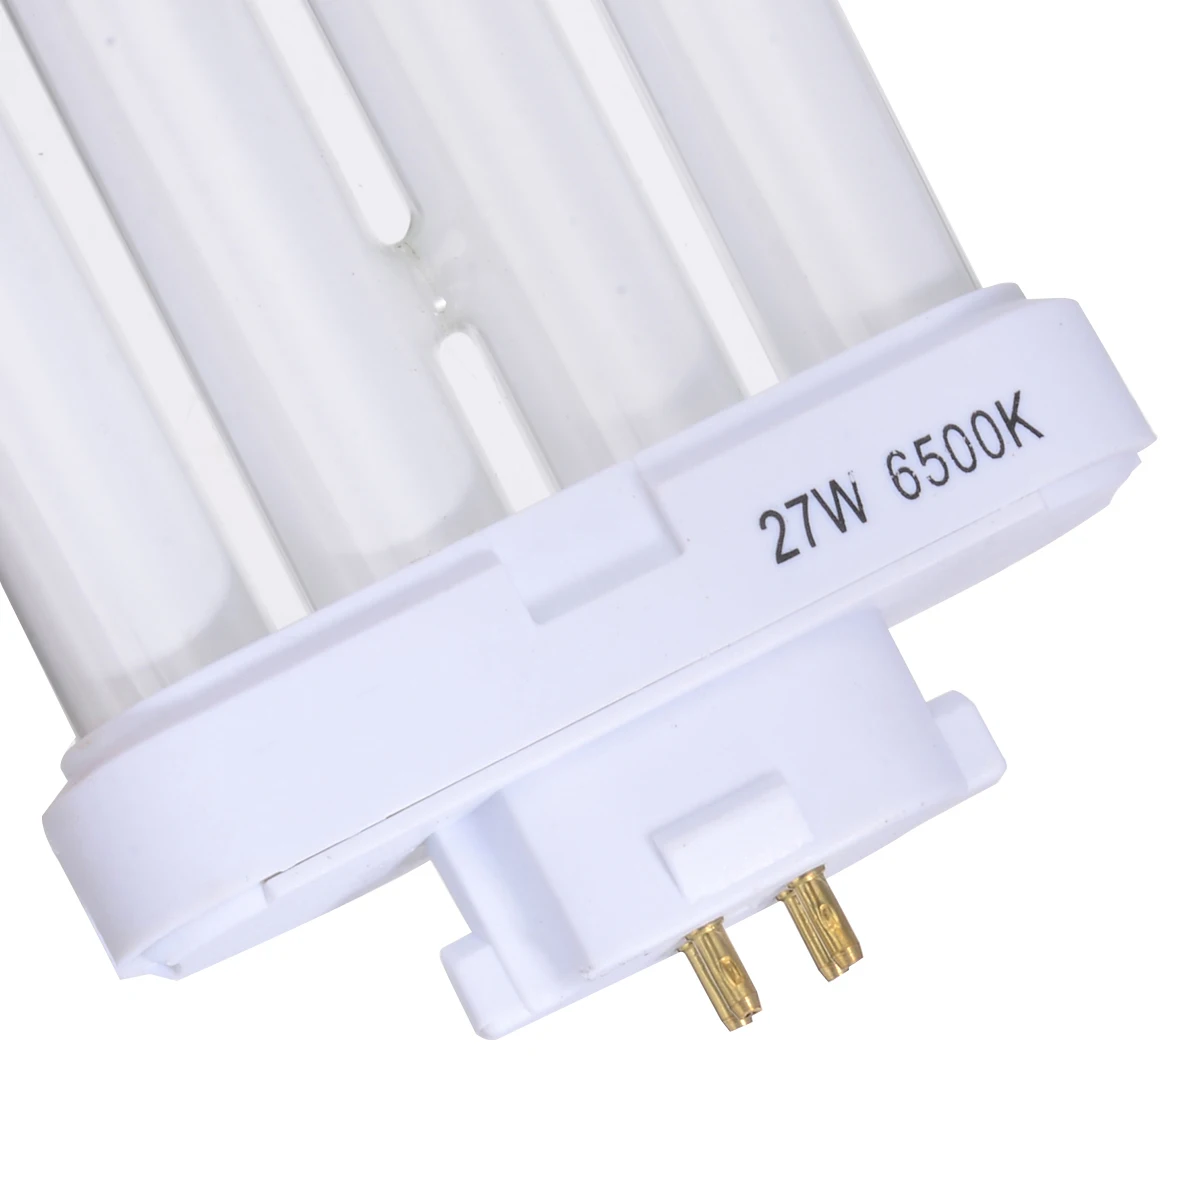 High Efficient Energy Saving Light 27W FML27/65K 4 Pin Quad Tube Fluorescent Light Bulb Lamp Pure White Lights